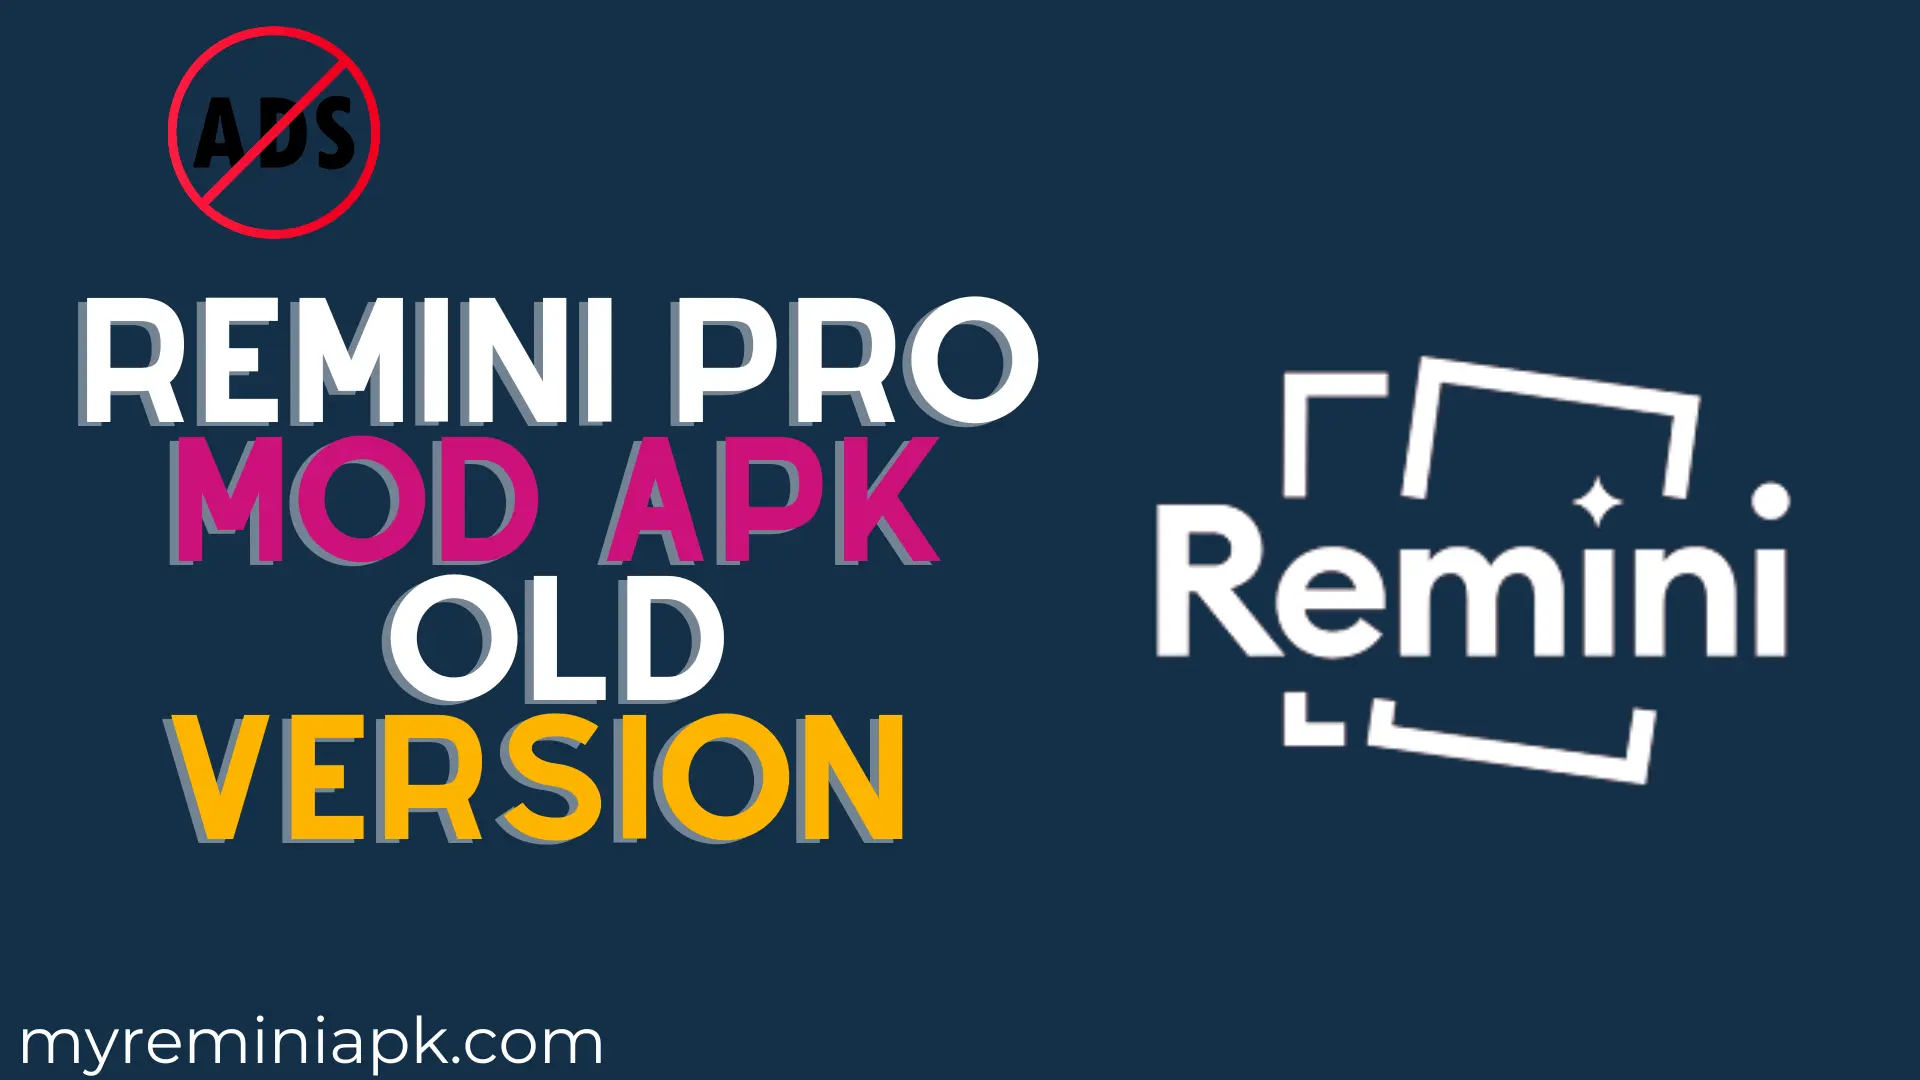 Remini Pro MOD APK Old Version (All Version, No Ads)